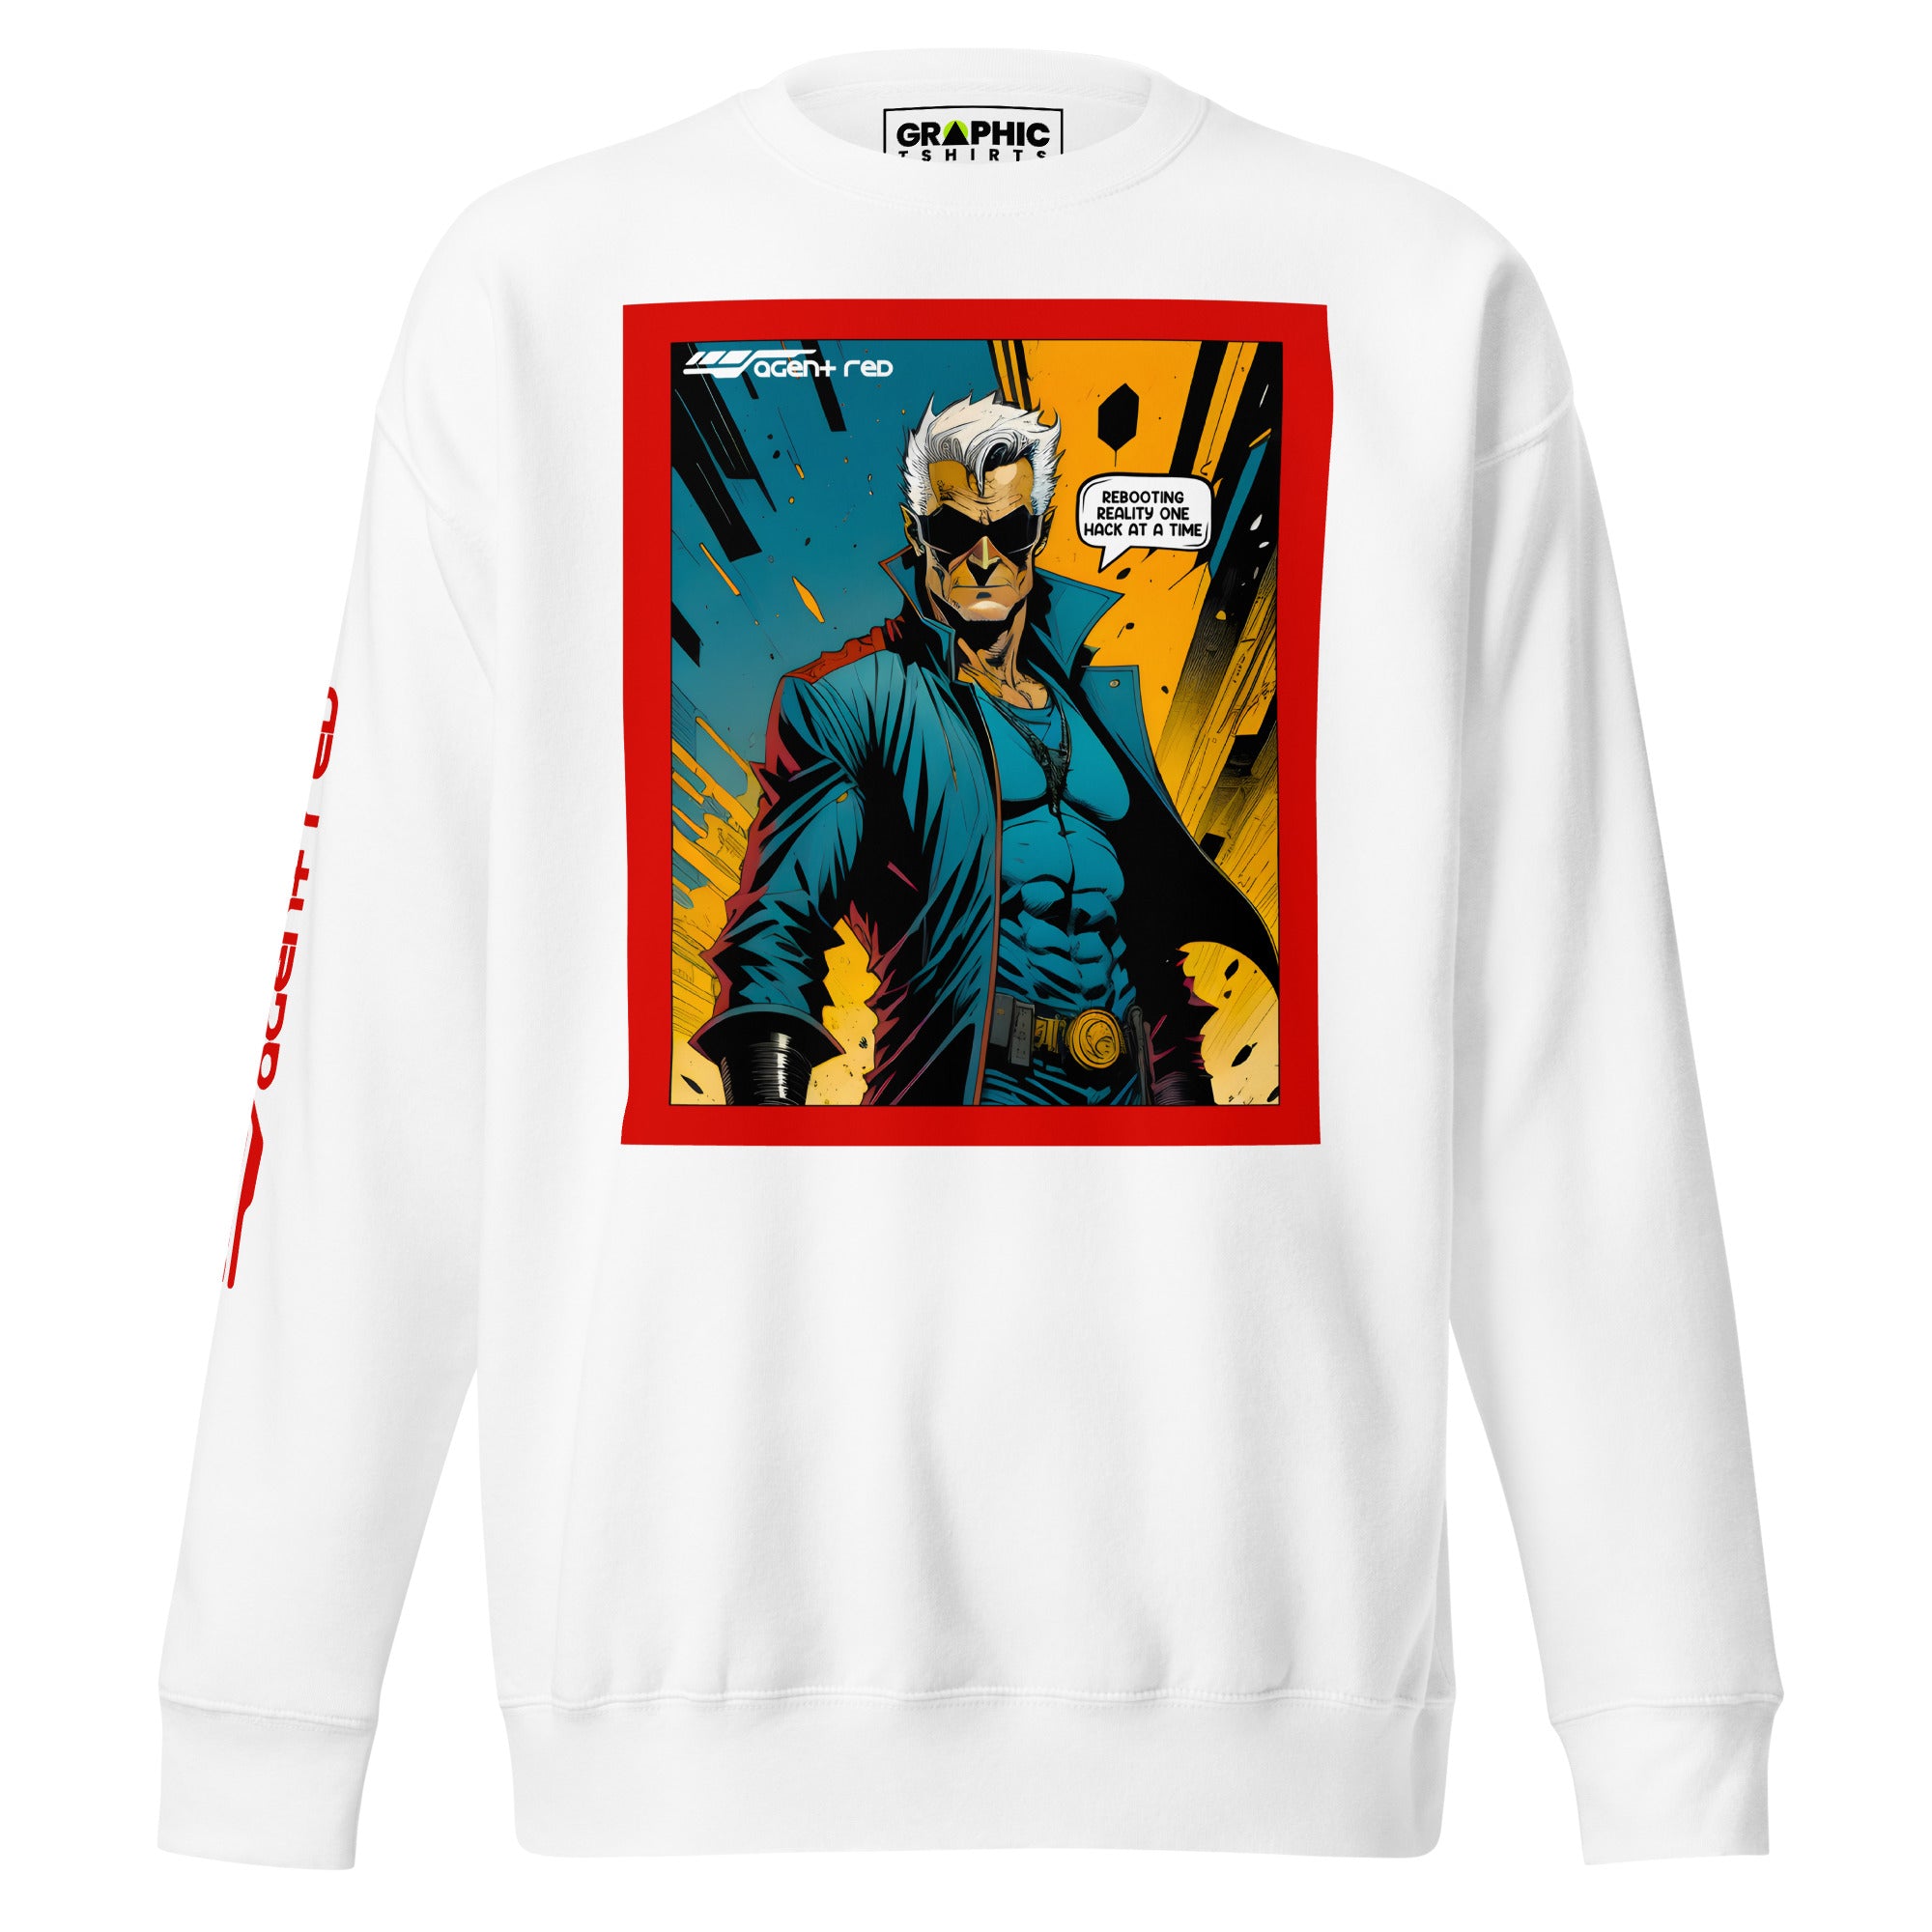 Unisex Premium Sweatshirt - Agent Red Cyberpunk Series v.63